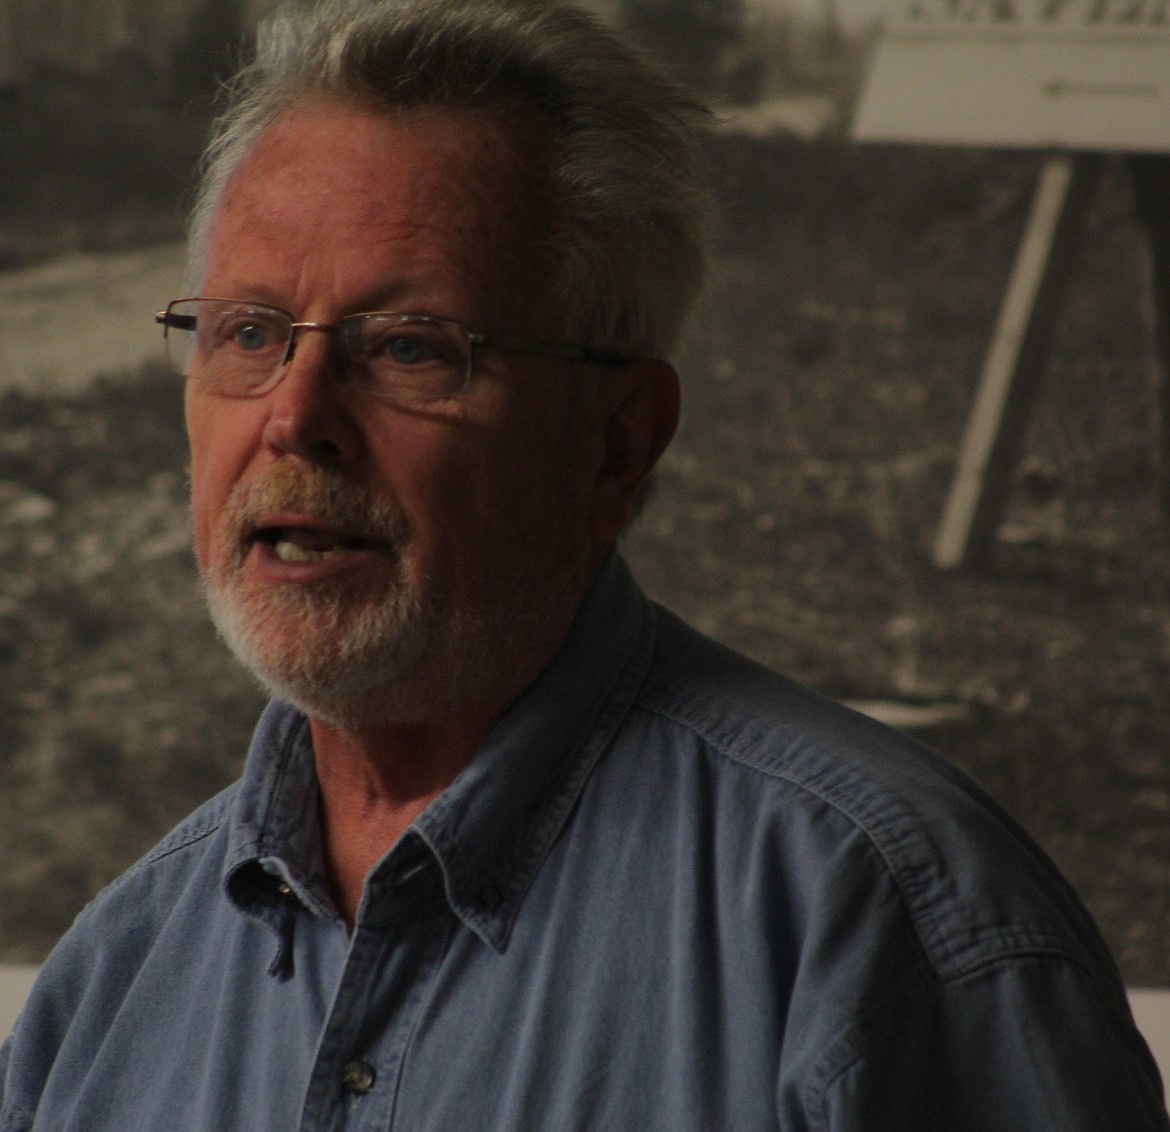 John Shontz of the Milwaukee Historical Society presents the history of Taft.